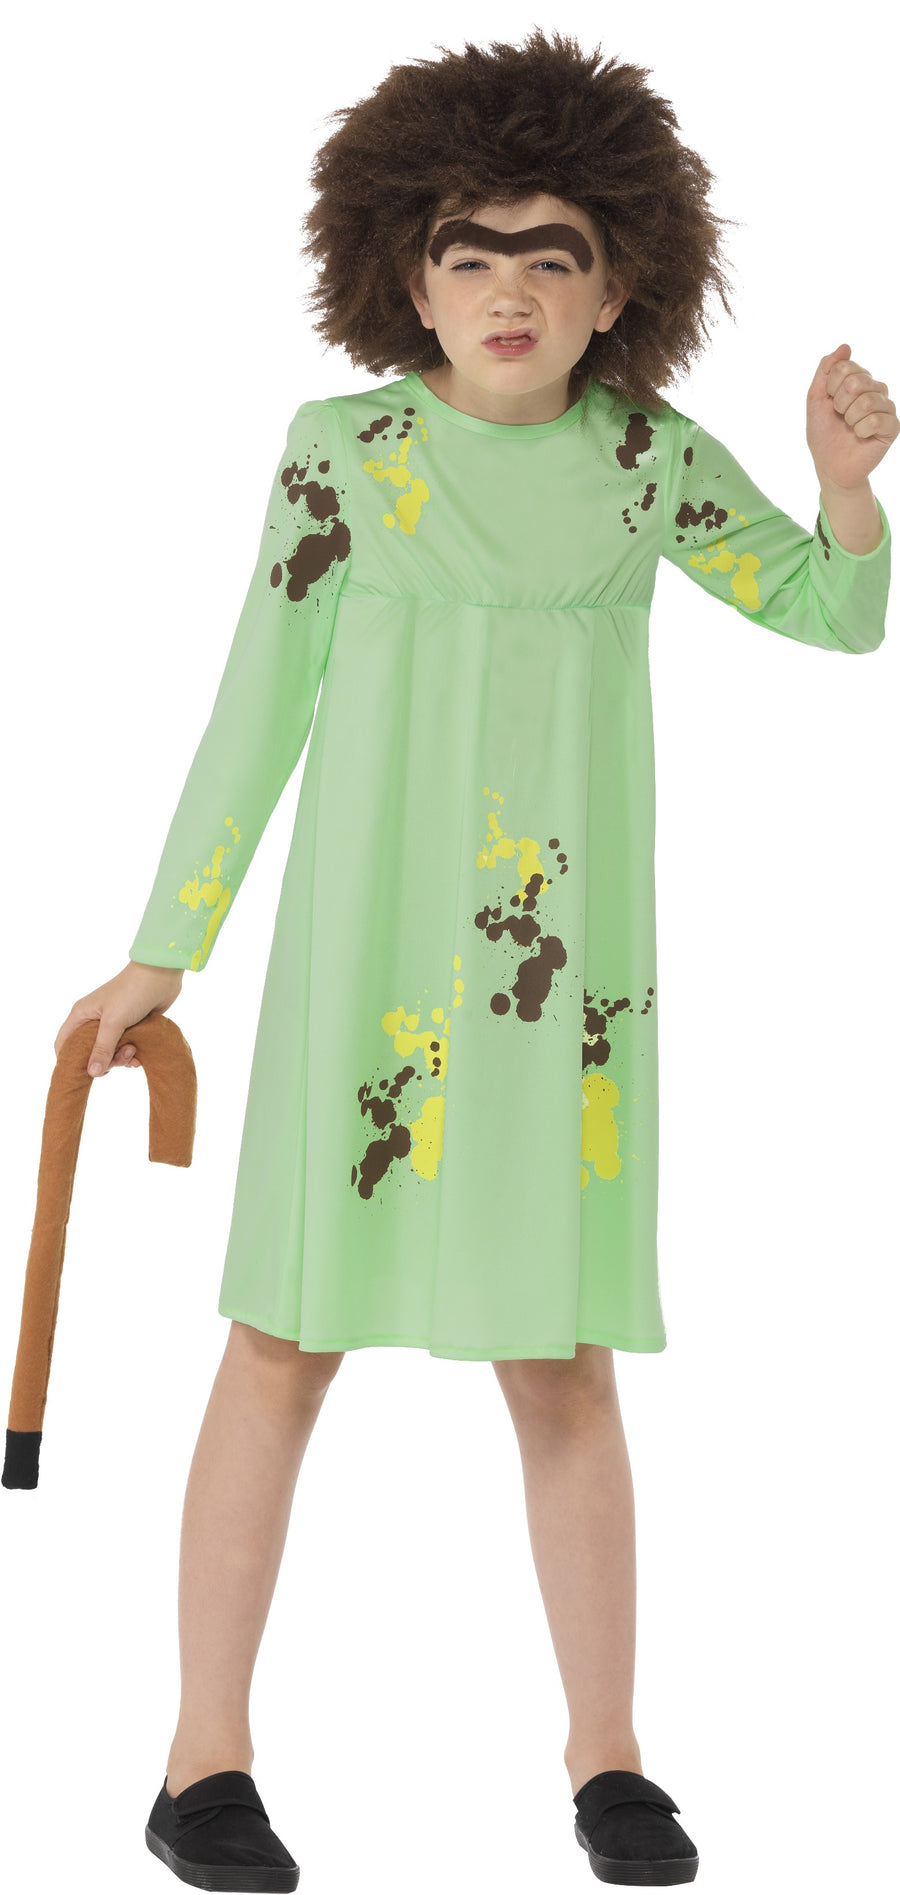 Roald Dahl-Themed Mrs. Twit Girls Book Day Costume